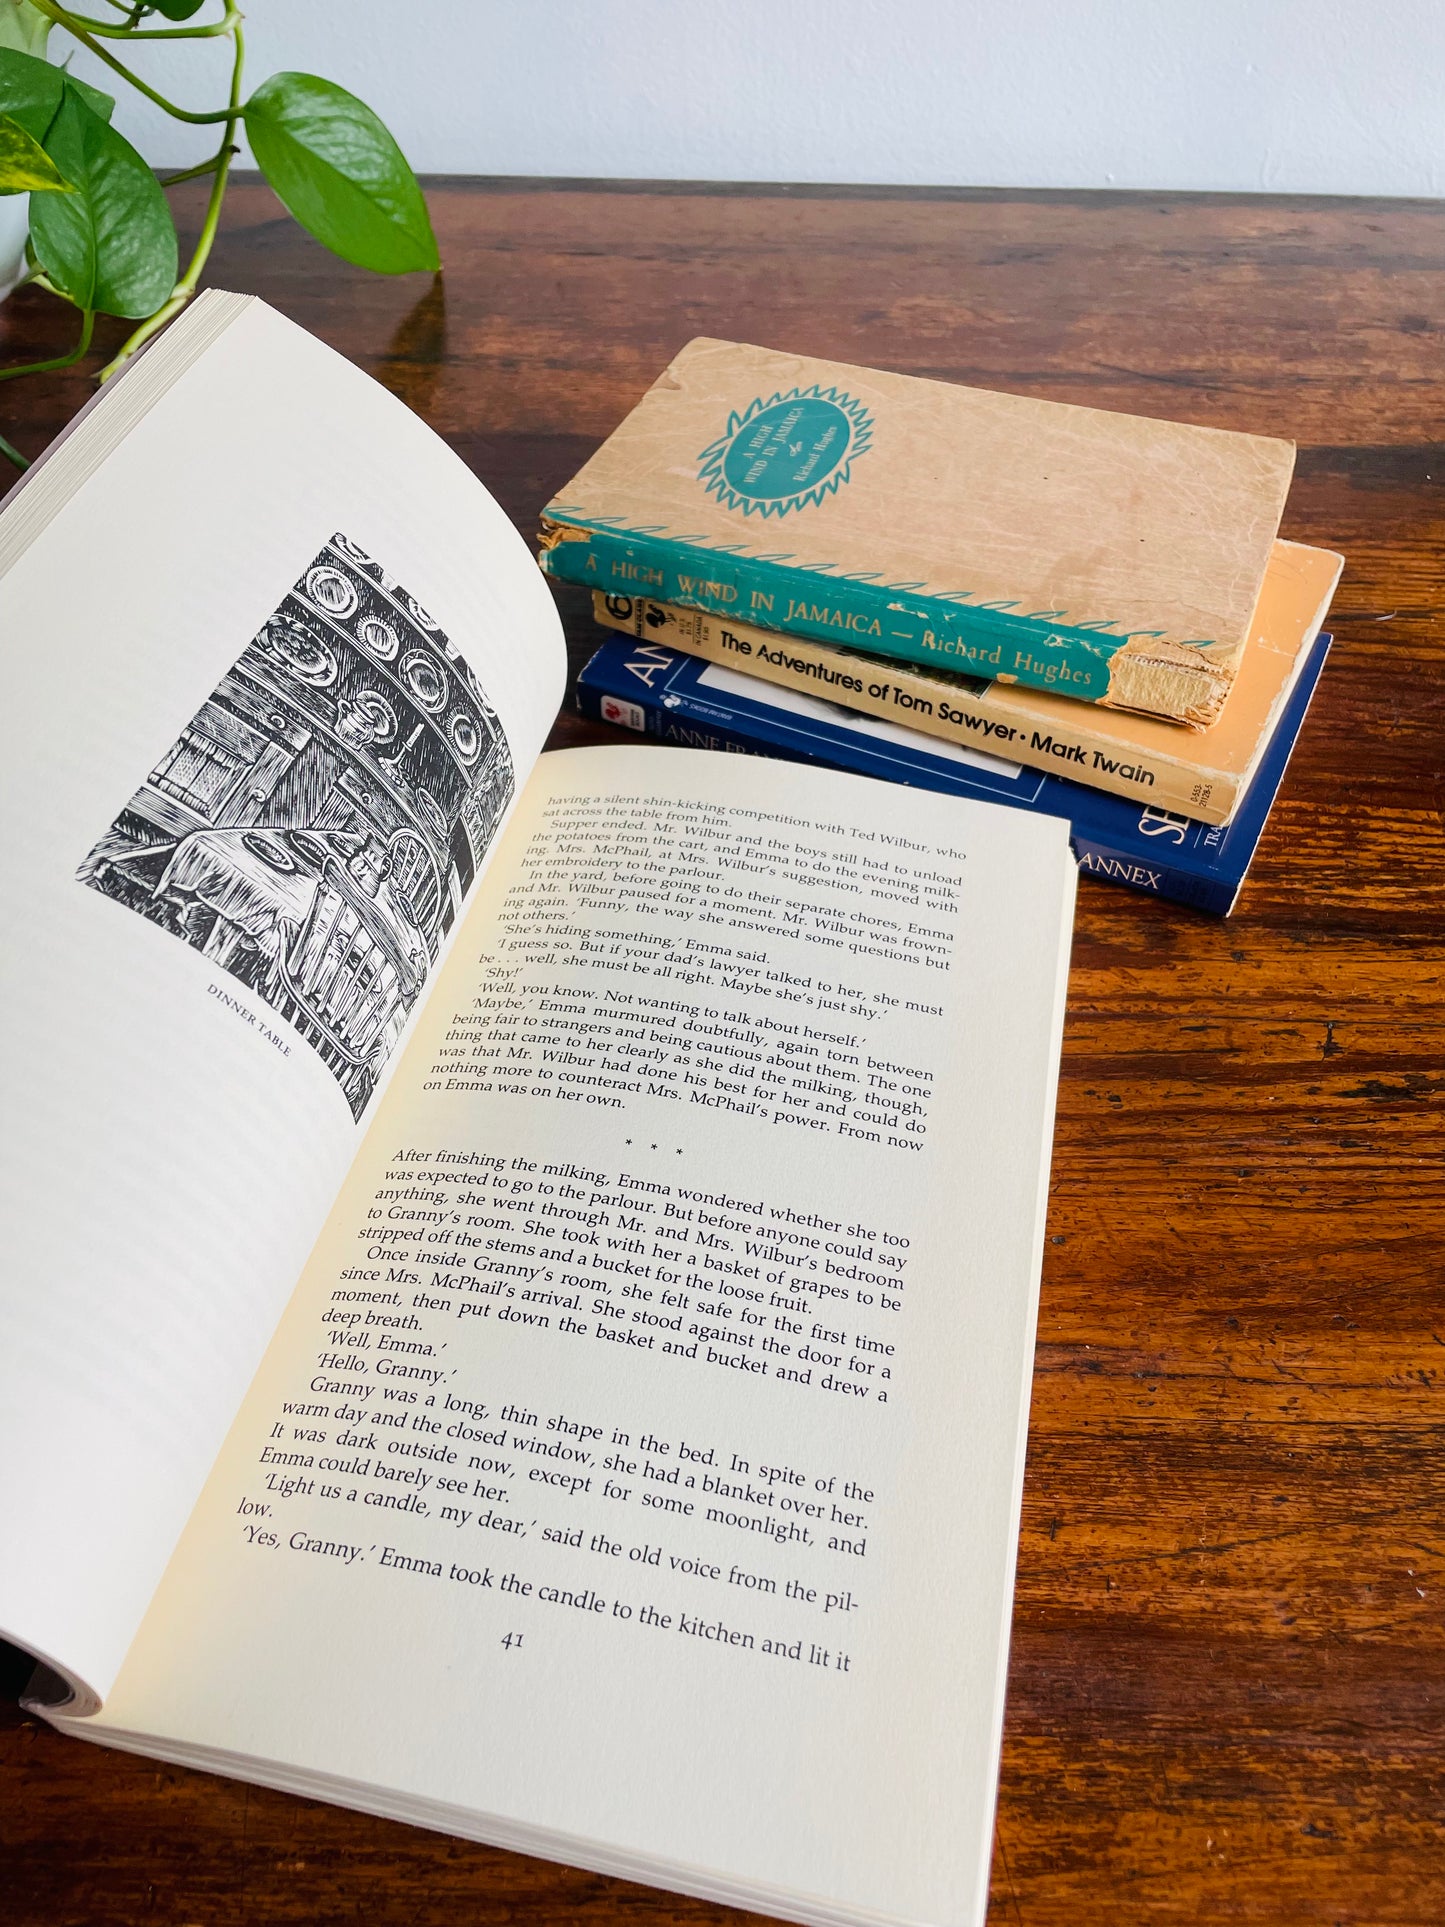 Young Adult Vintage Book Bundle - Anne Frank, Tom Sawyer, High Wind Jamaica, Tinderbox